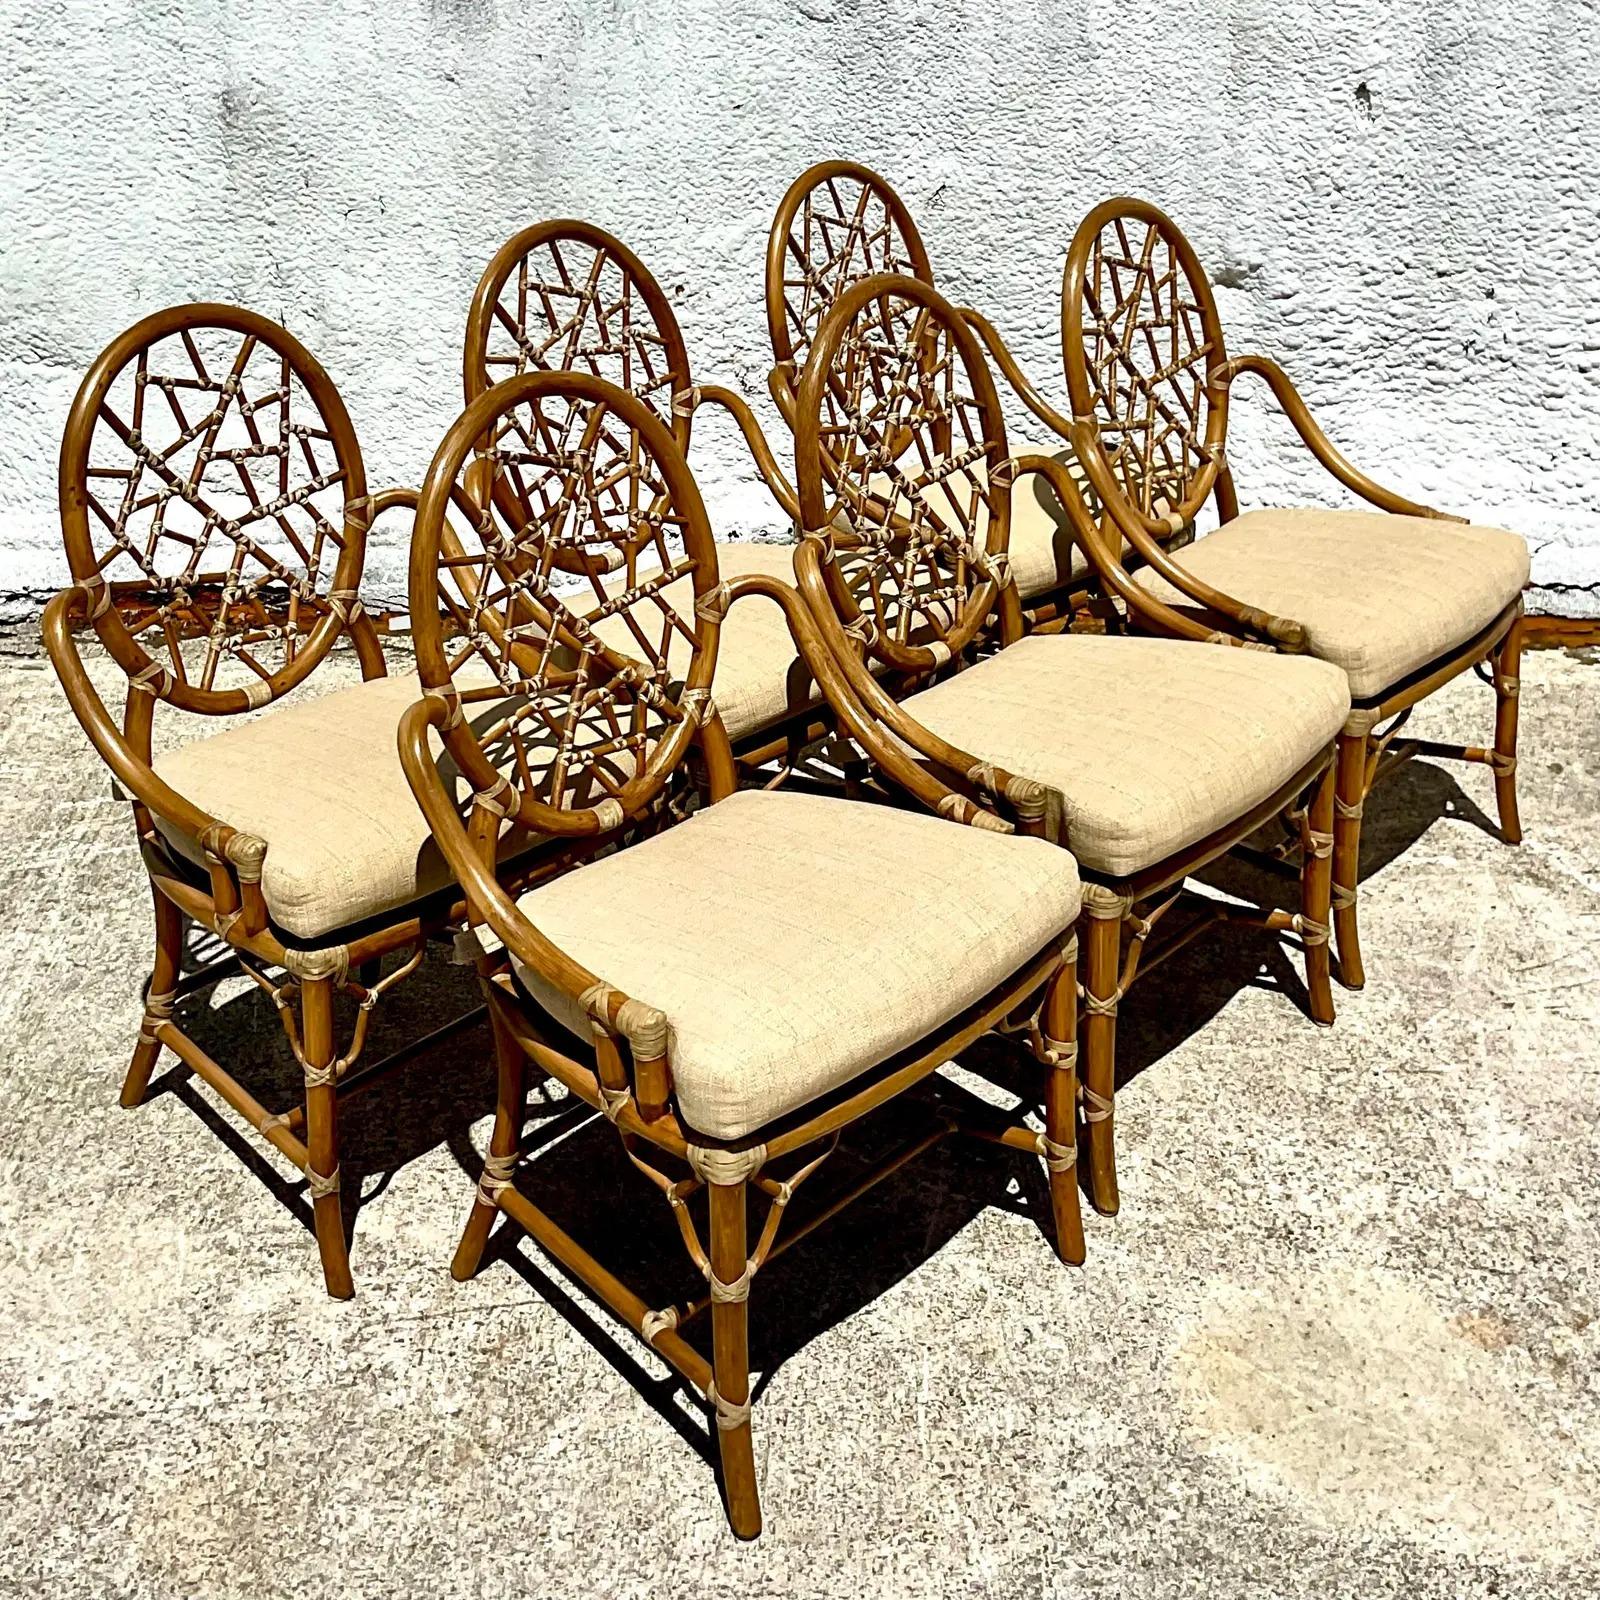 Vintage Coastal McGuire “Cracked Ice” Rattan Dining Chairs - Set of 6 2